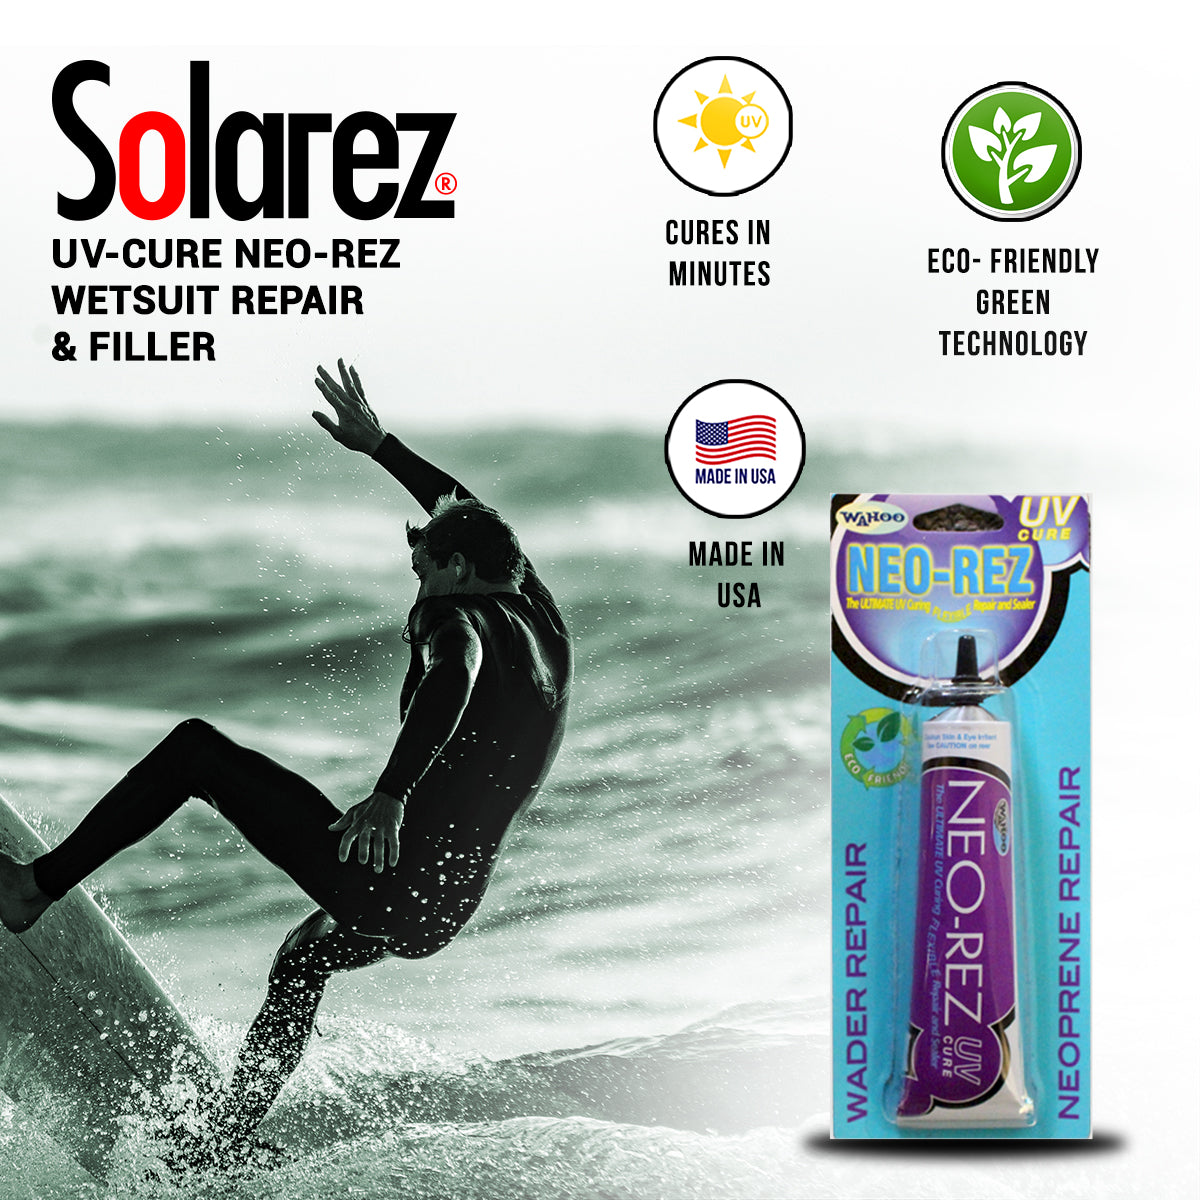 UV-Cure Neo-Rez Wetsuit Repair & Filler 1.0 oz Tube - Jungle Surf Store - Bali - Indonesia